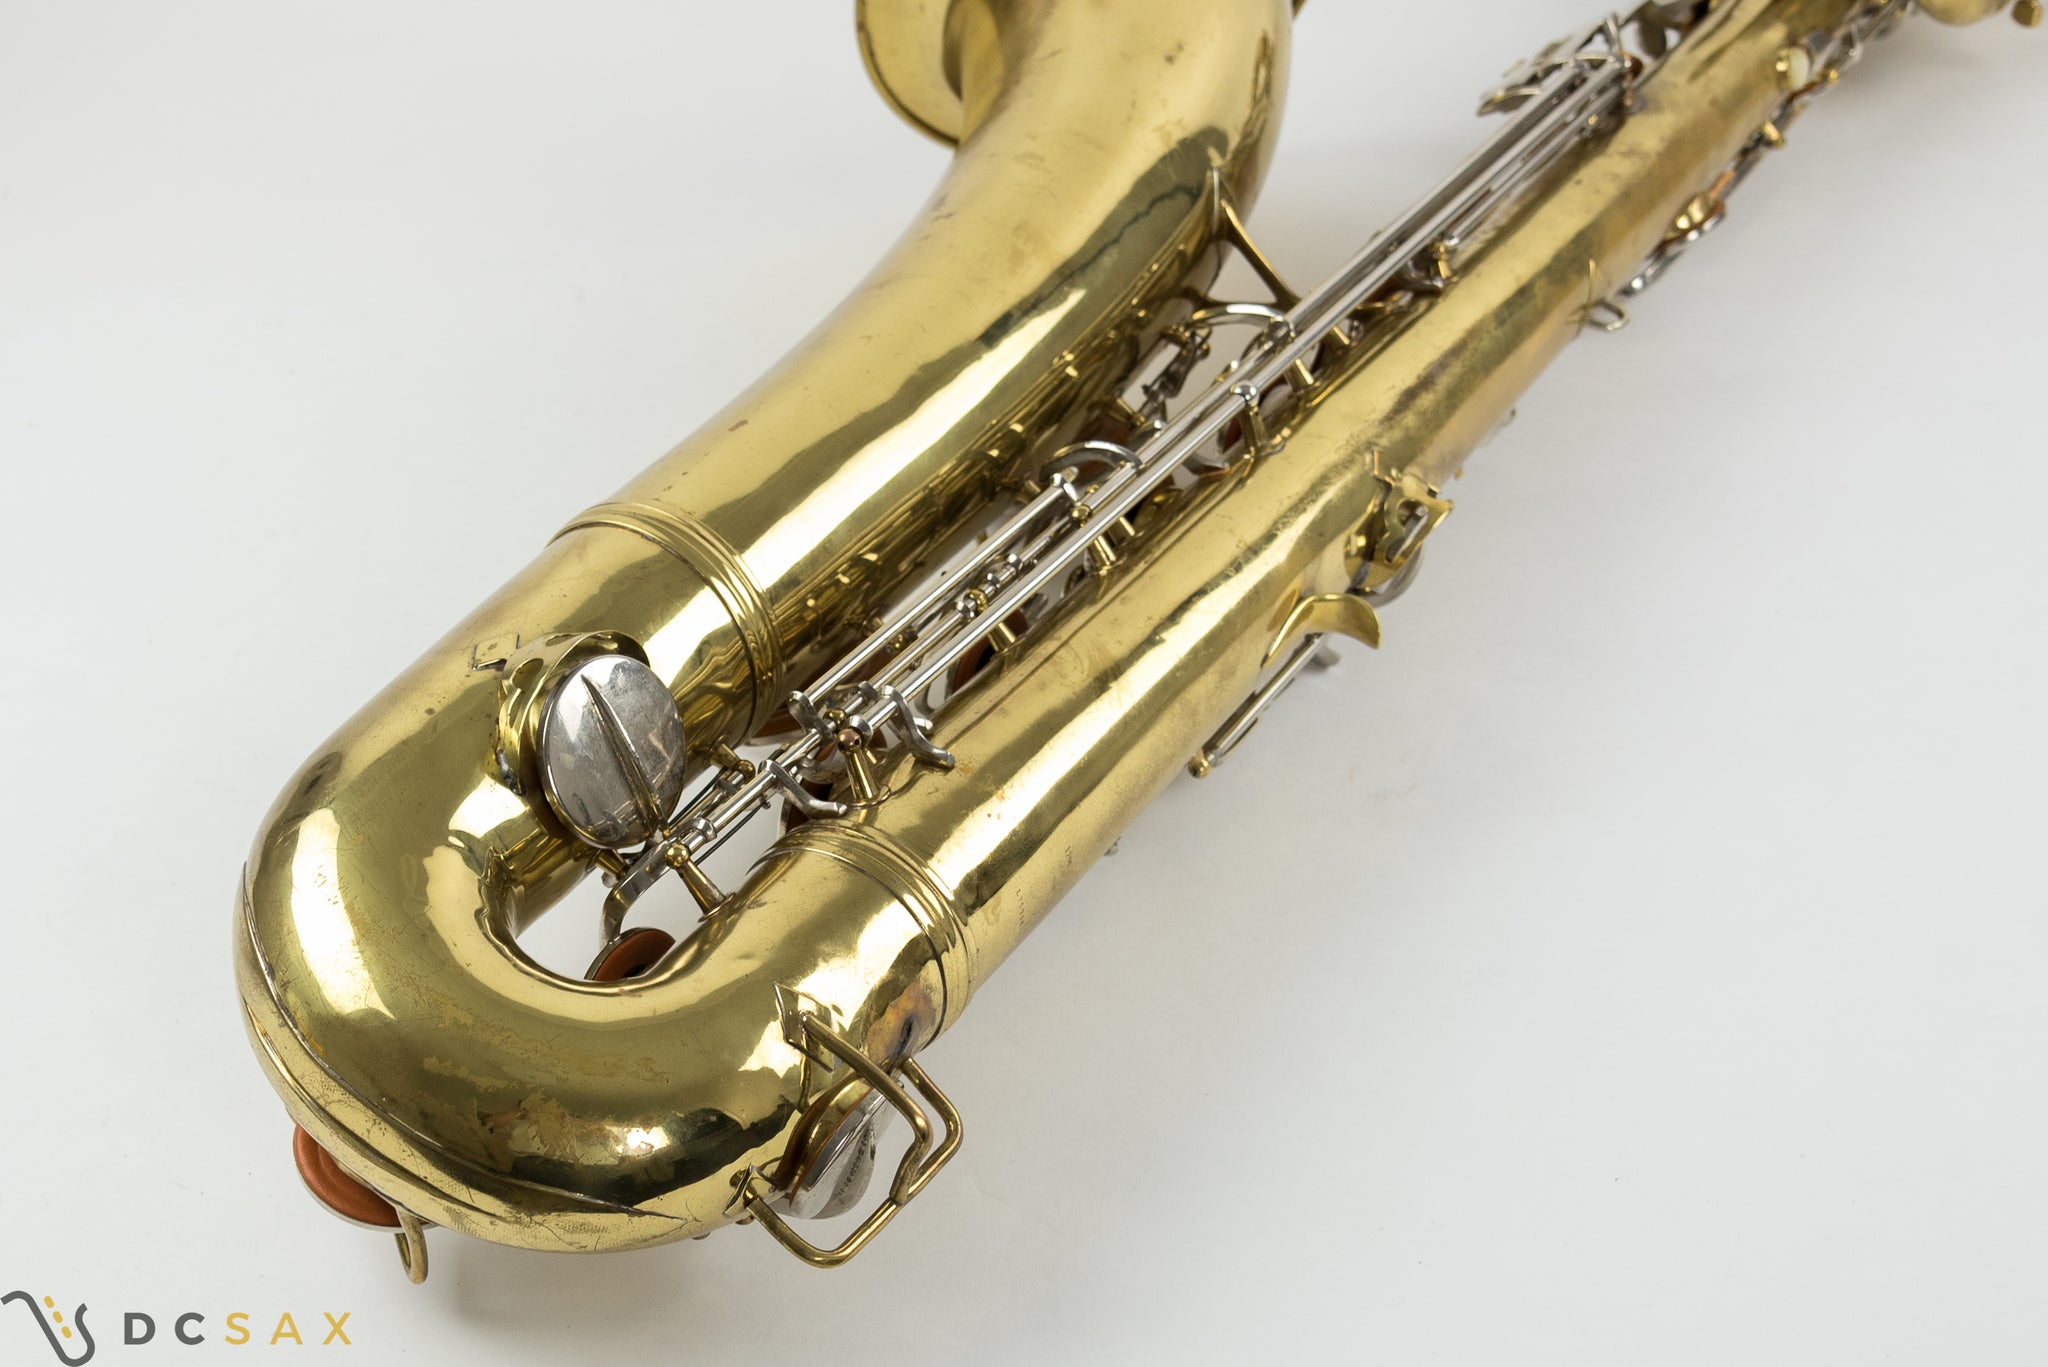 conn saxophone for sale